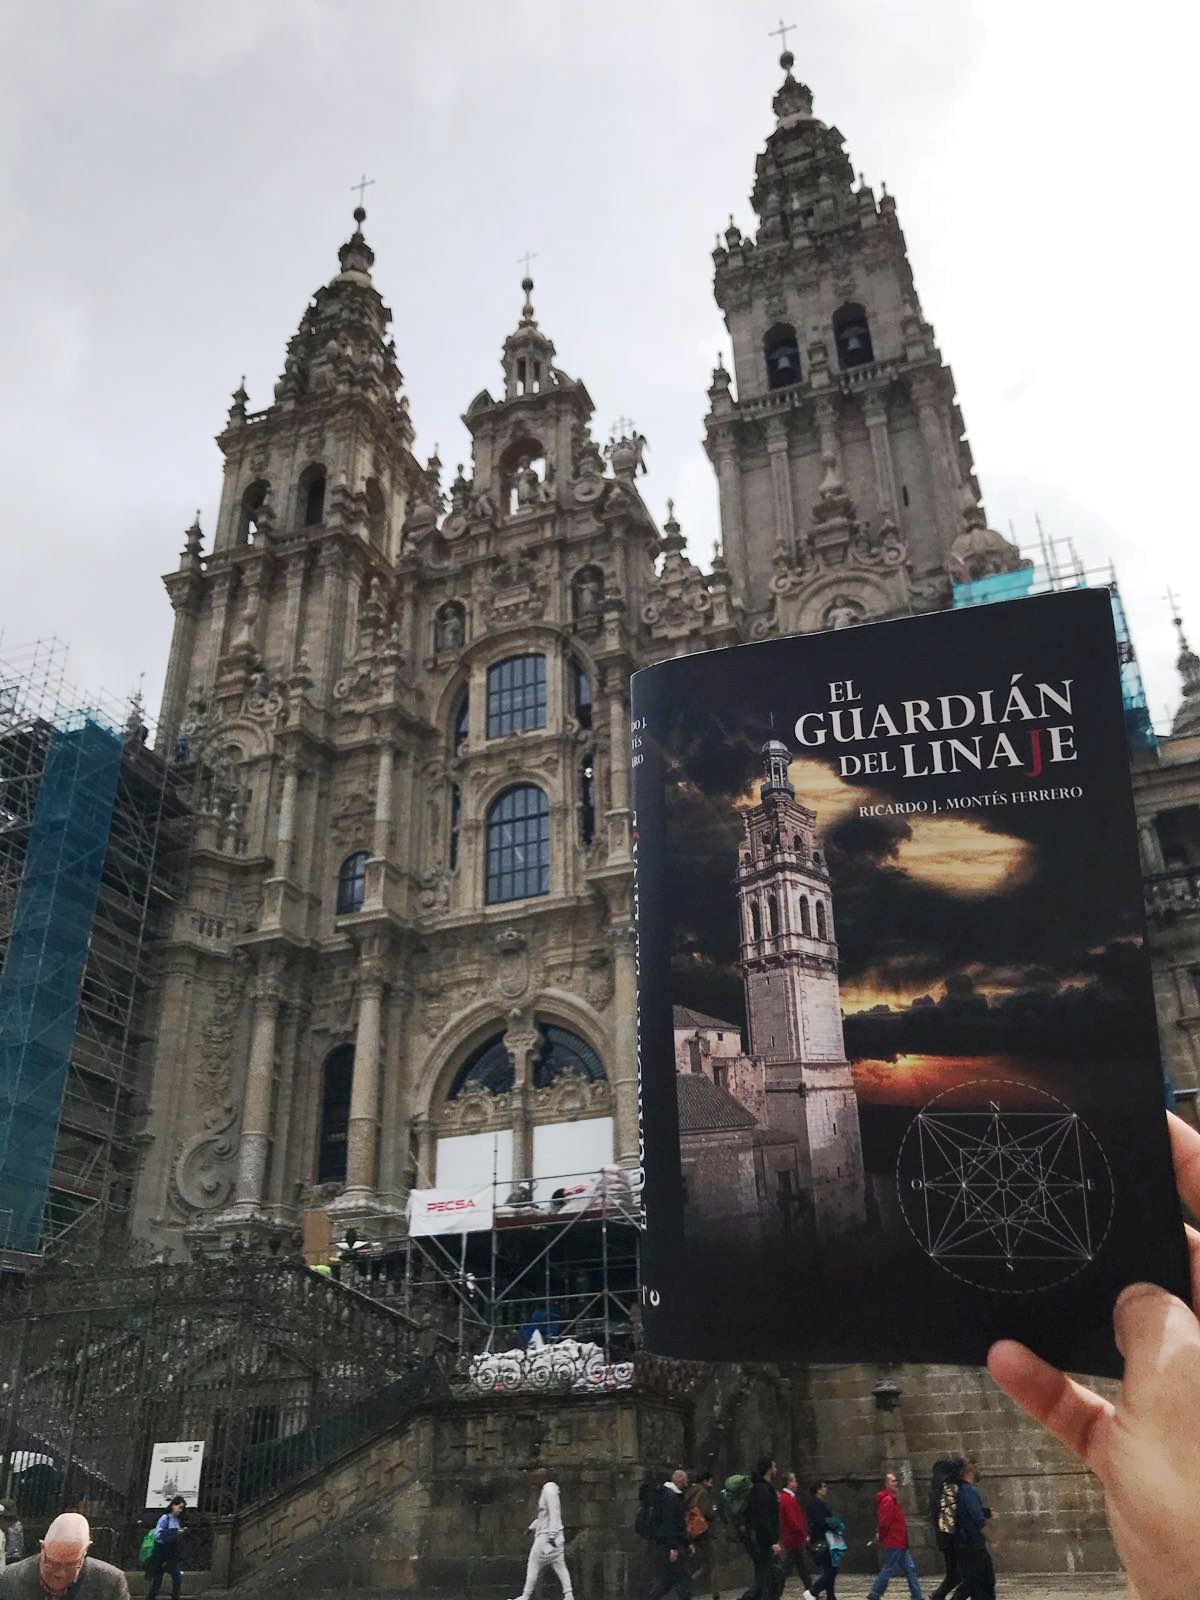 La Novela "El Guardián del Linaje" en Santiago Compostela